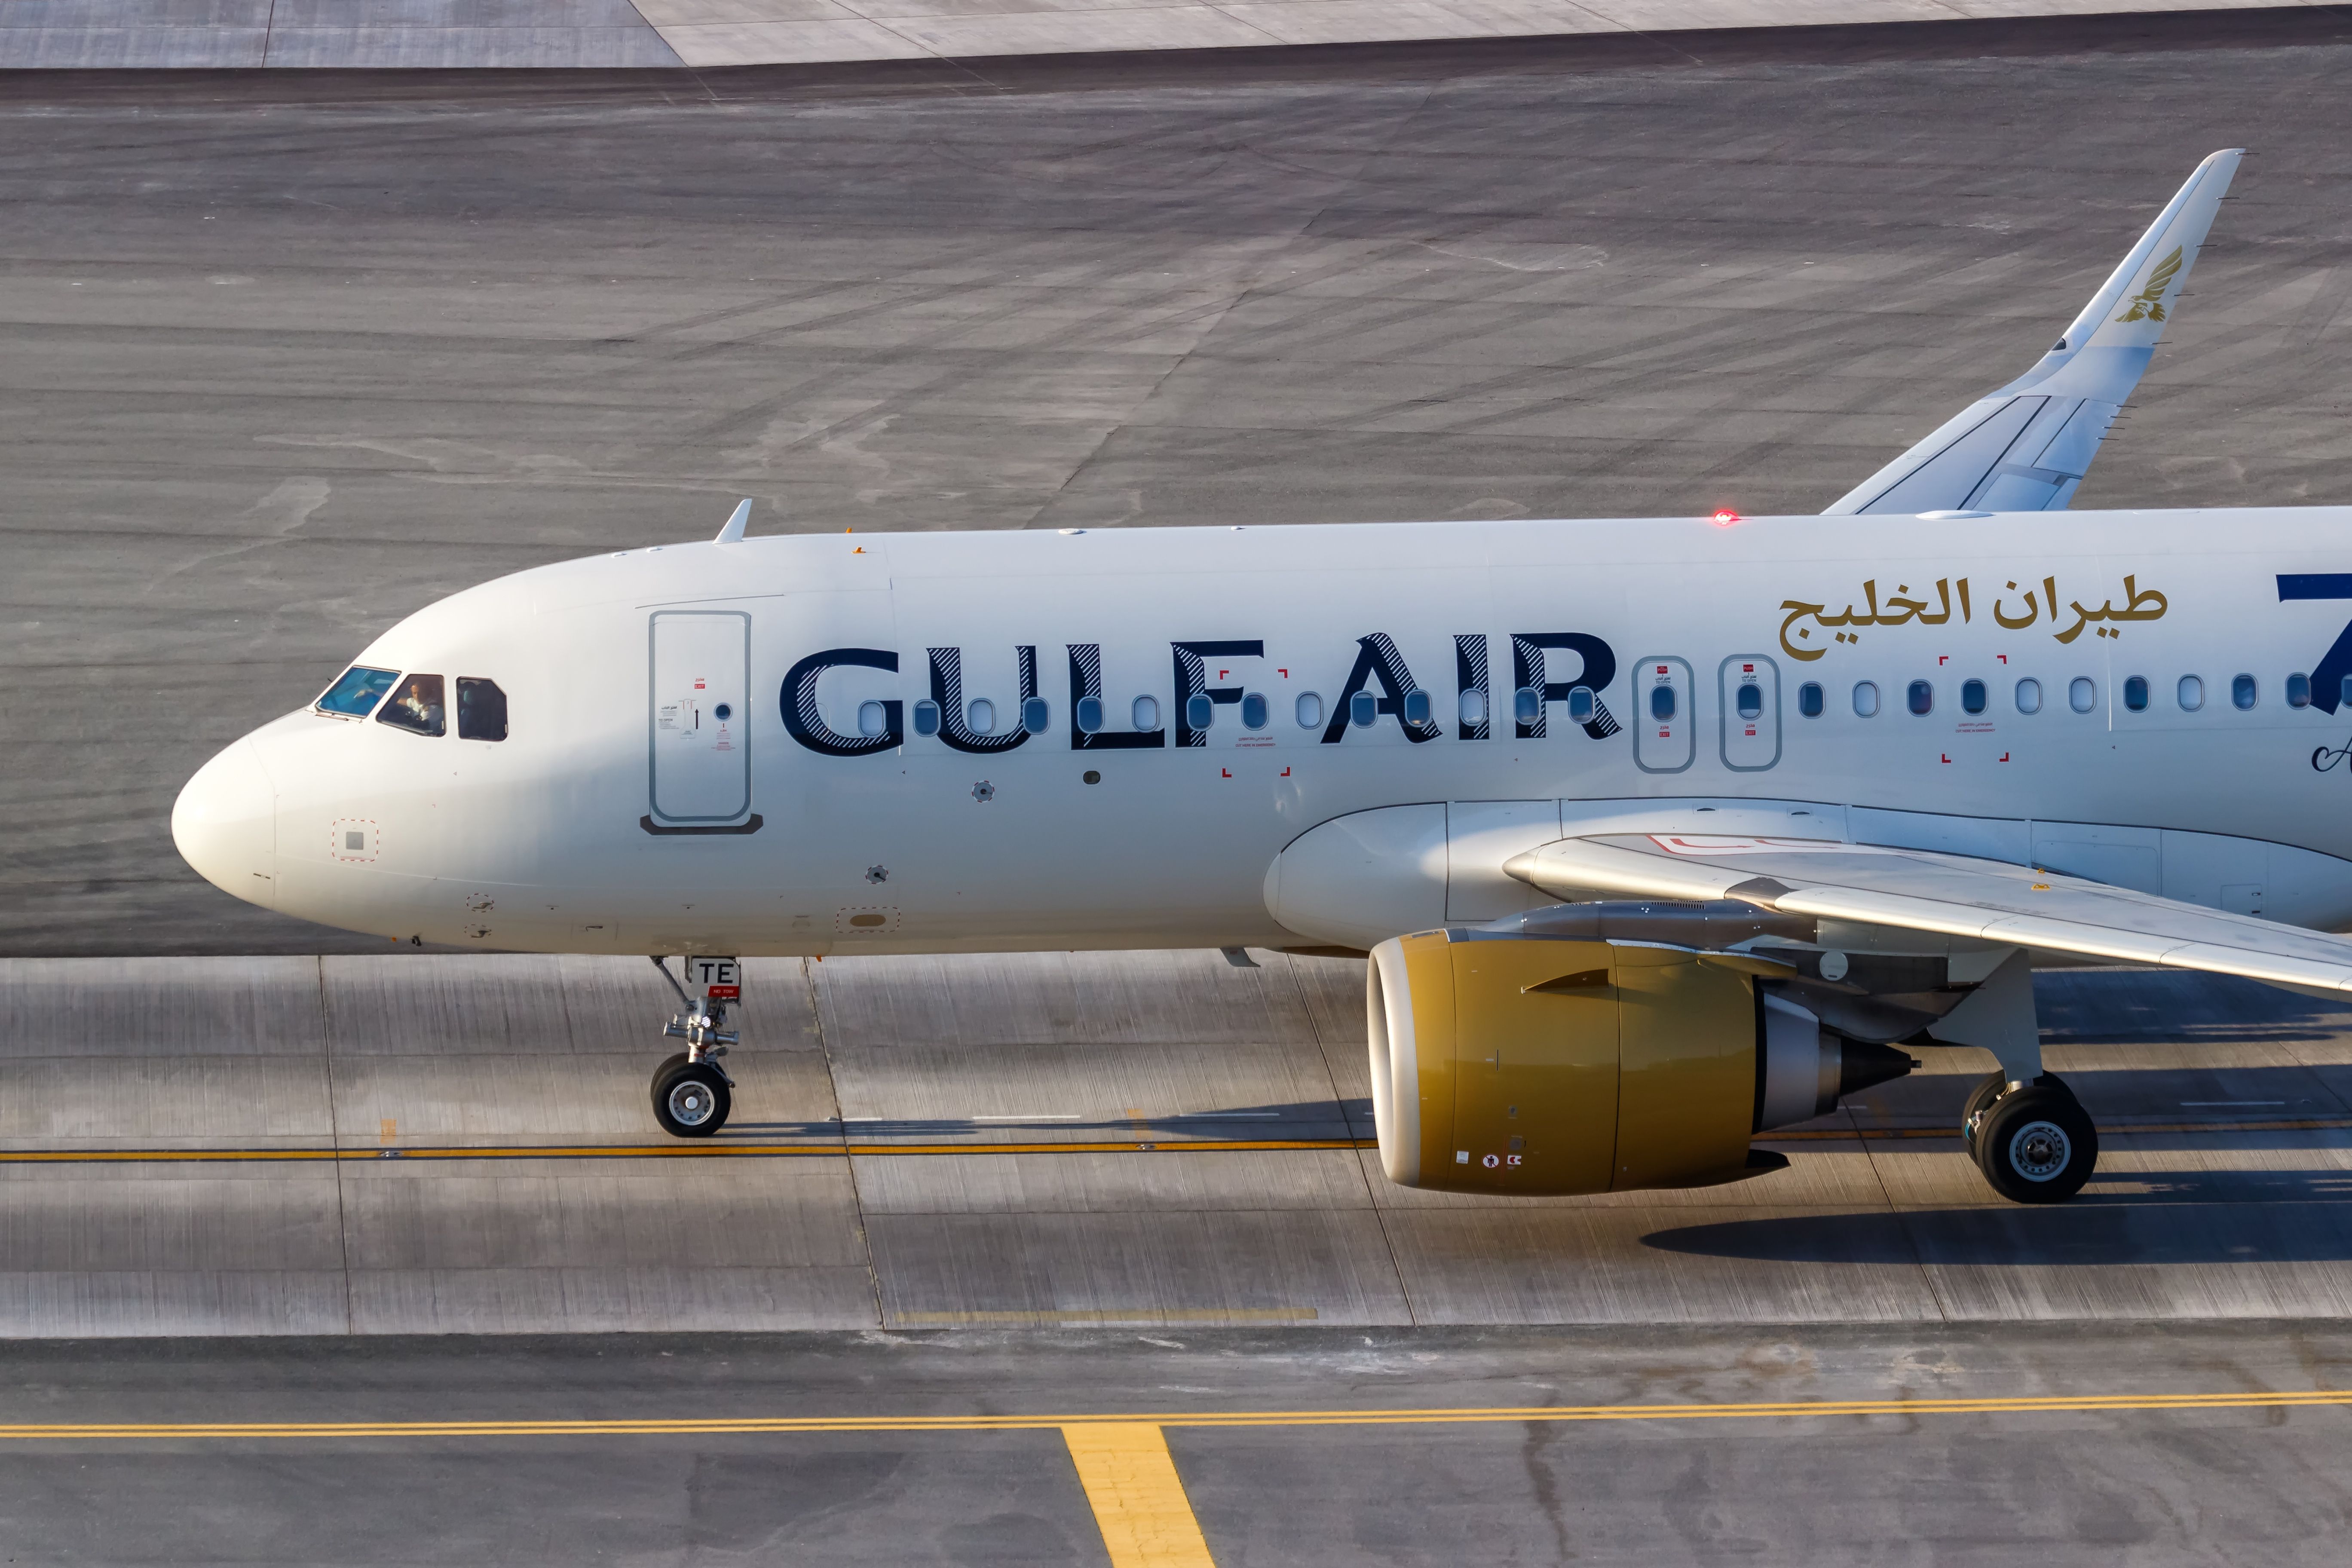 A Gulf Air Airbus A320neo on an airport apron.